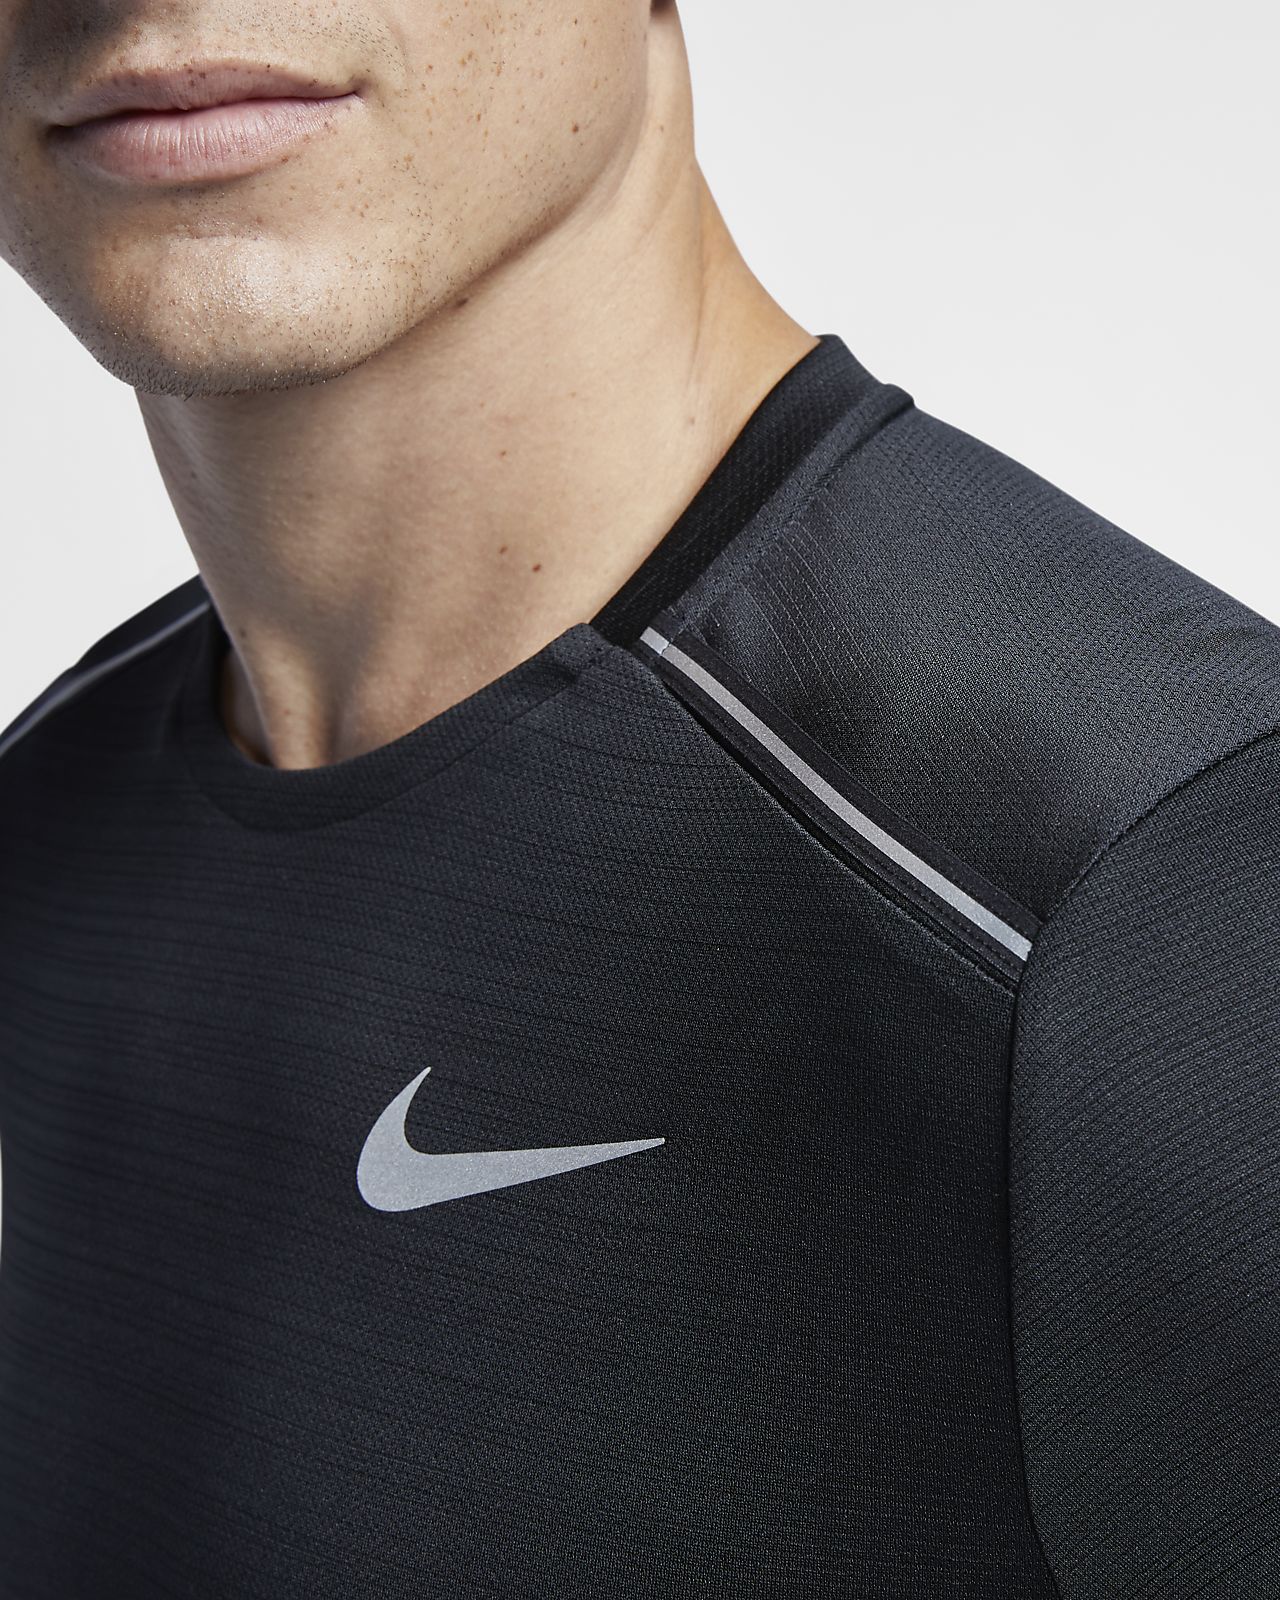 Nike Dri Fit Running Vest Mens Shop Clothing Shoes Online